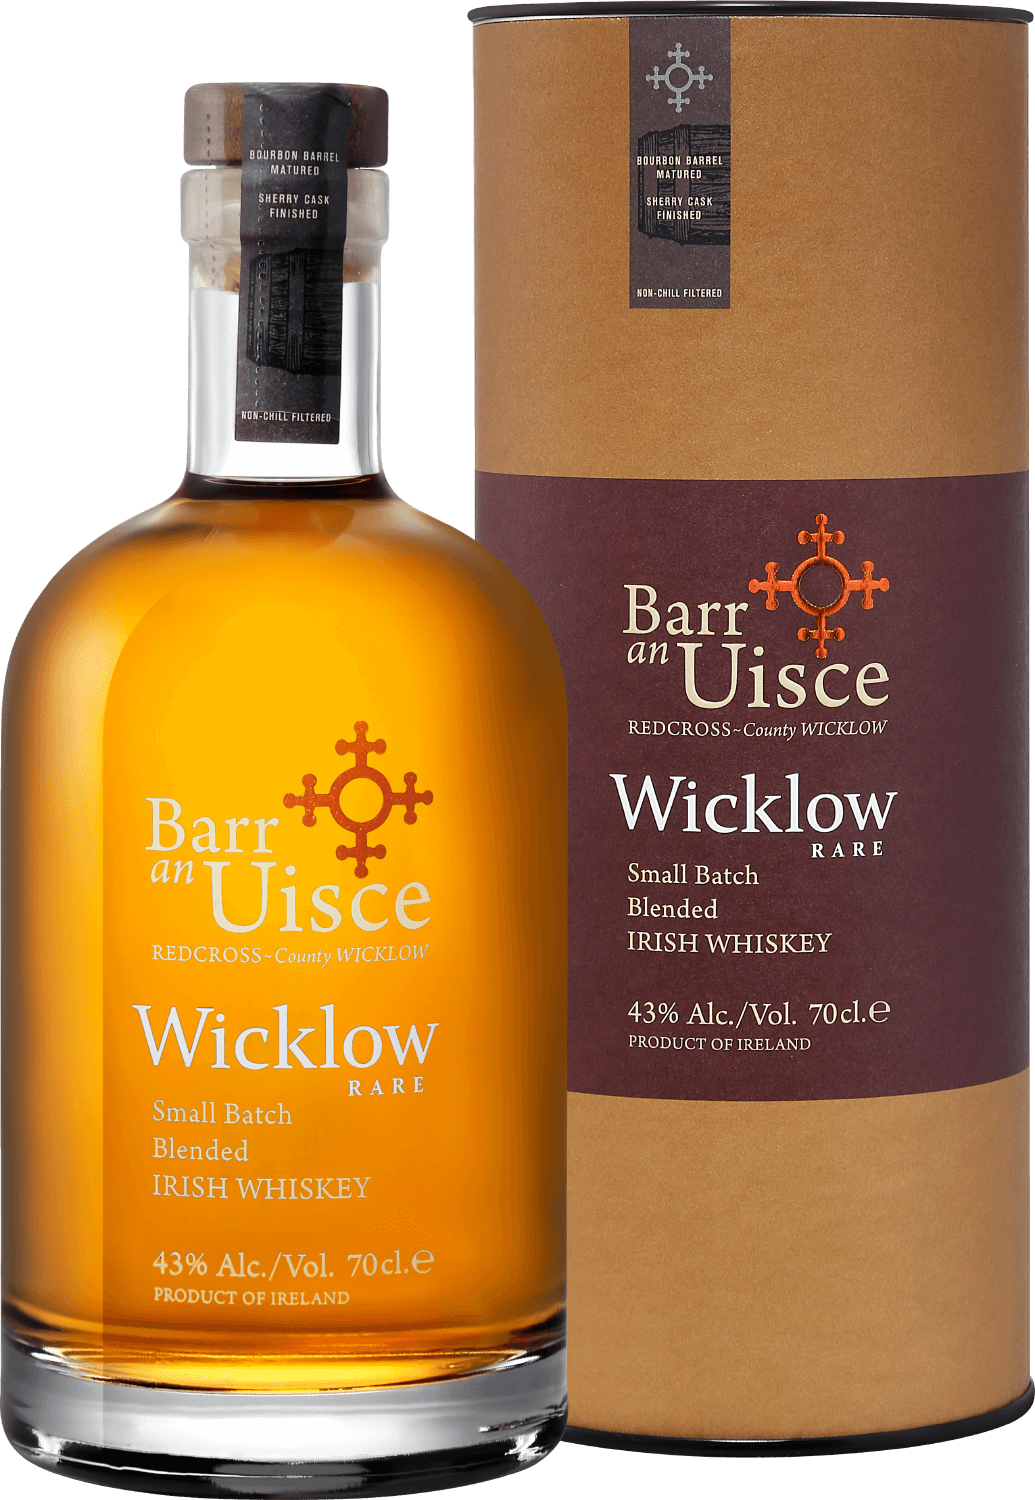 Barr an Uisce Wicklow Rare Small Batch Blended Irish Whiskey 4 YO (gift box) lambay small batch blend irish whiskey 4 y o gift box with 2 glasses